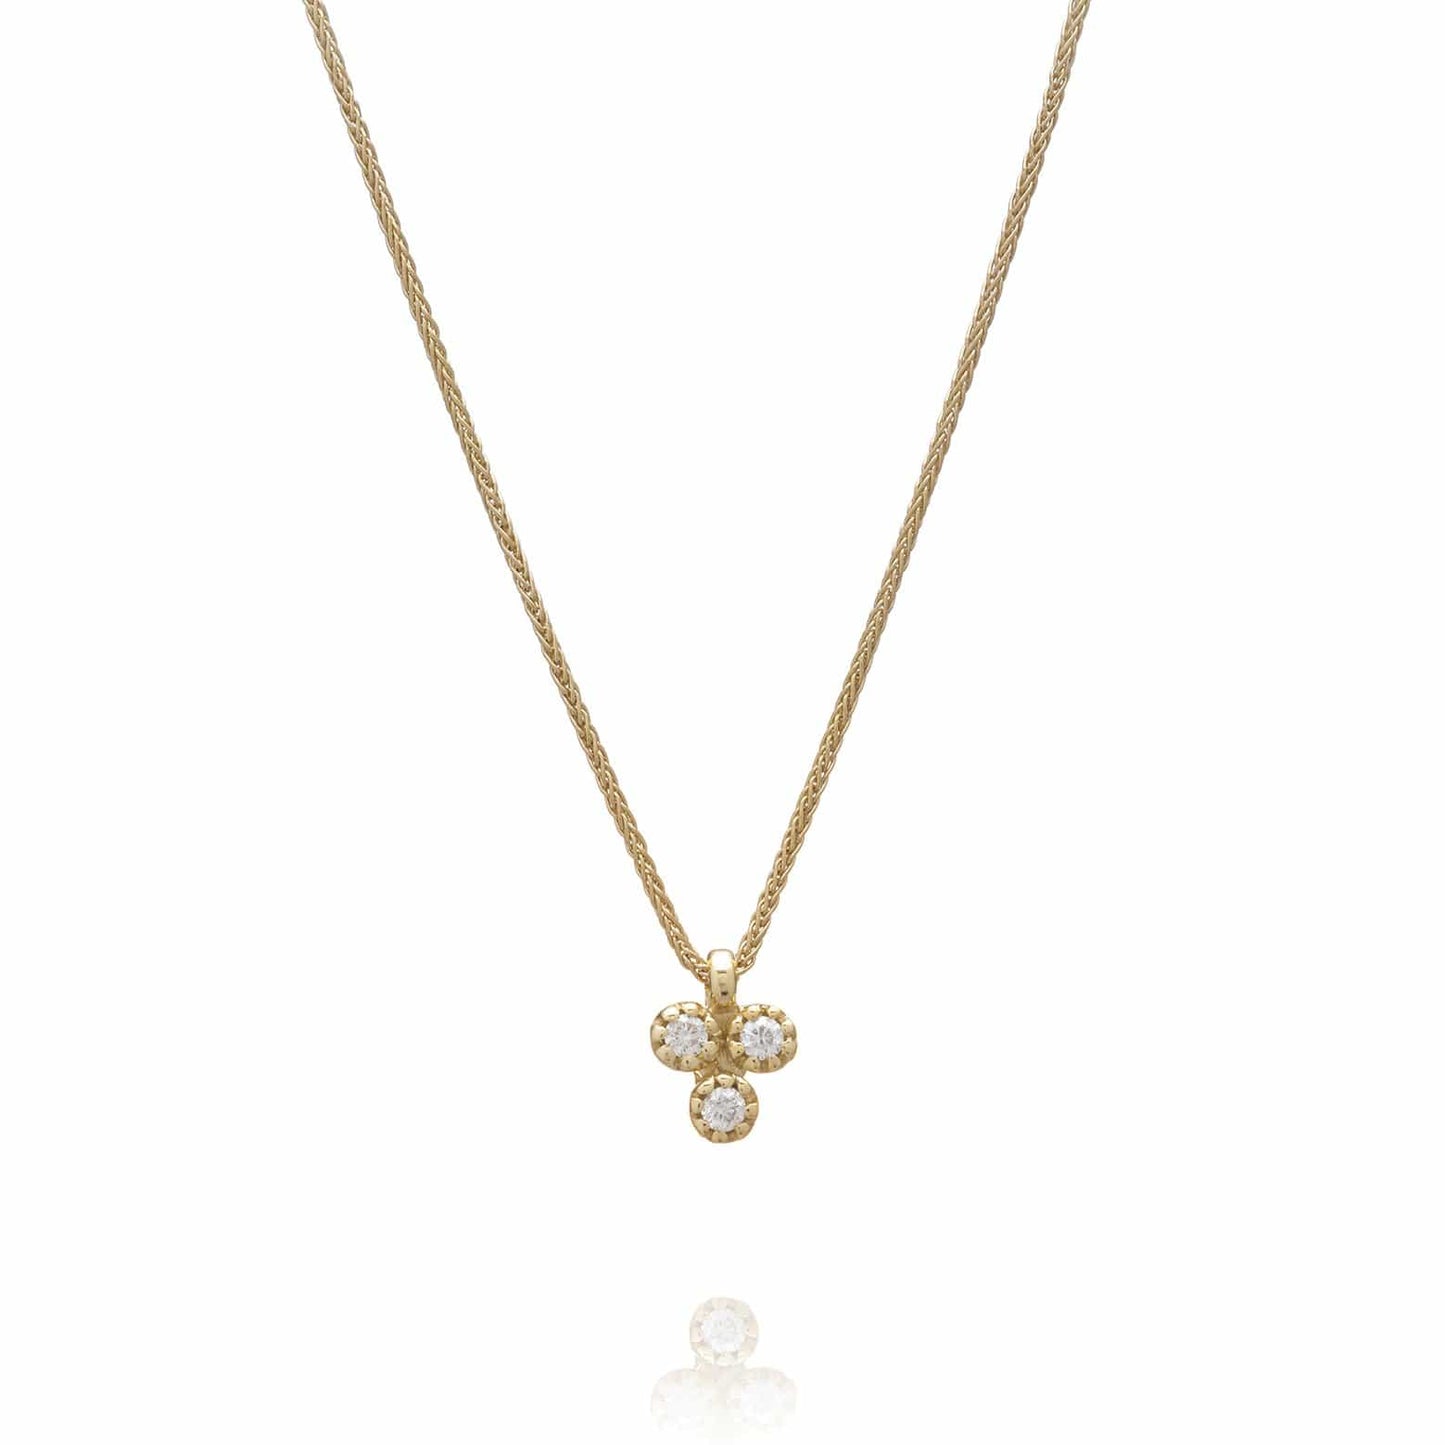 Dalia T Online Necklace Delicate Collection 14KT YG 3 Diamonds Medium Pendnat Necklace 0.15CT